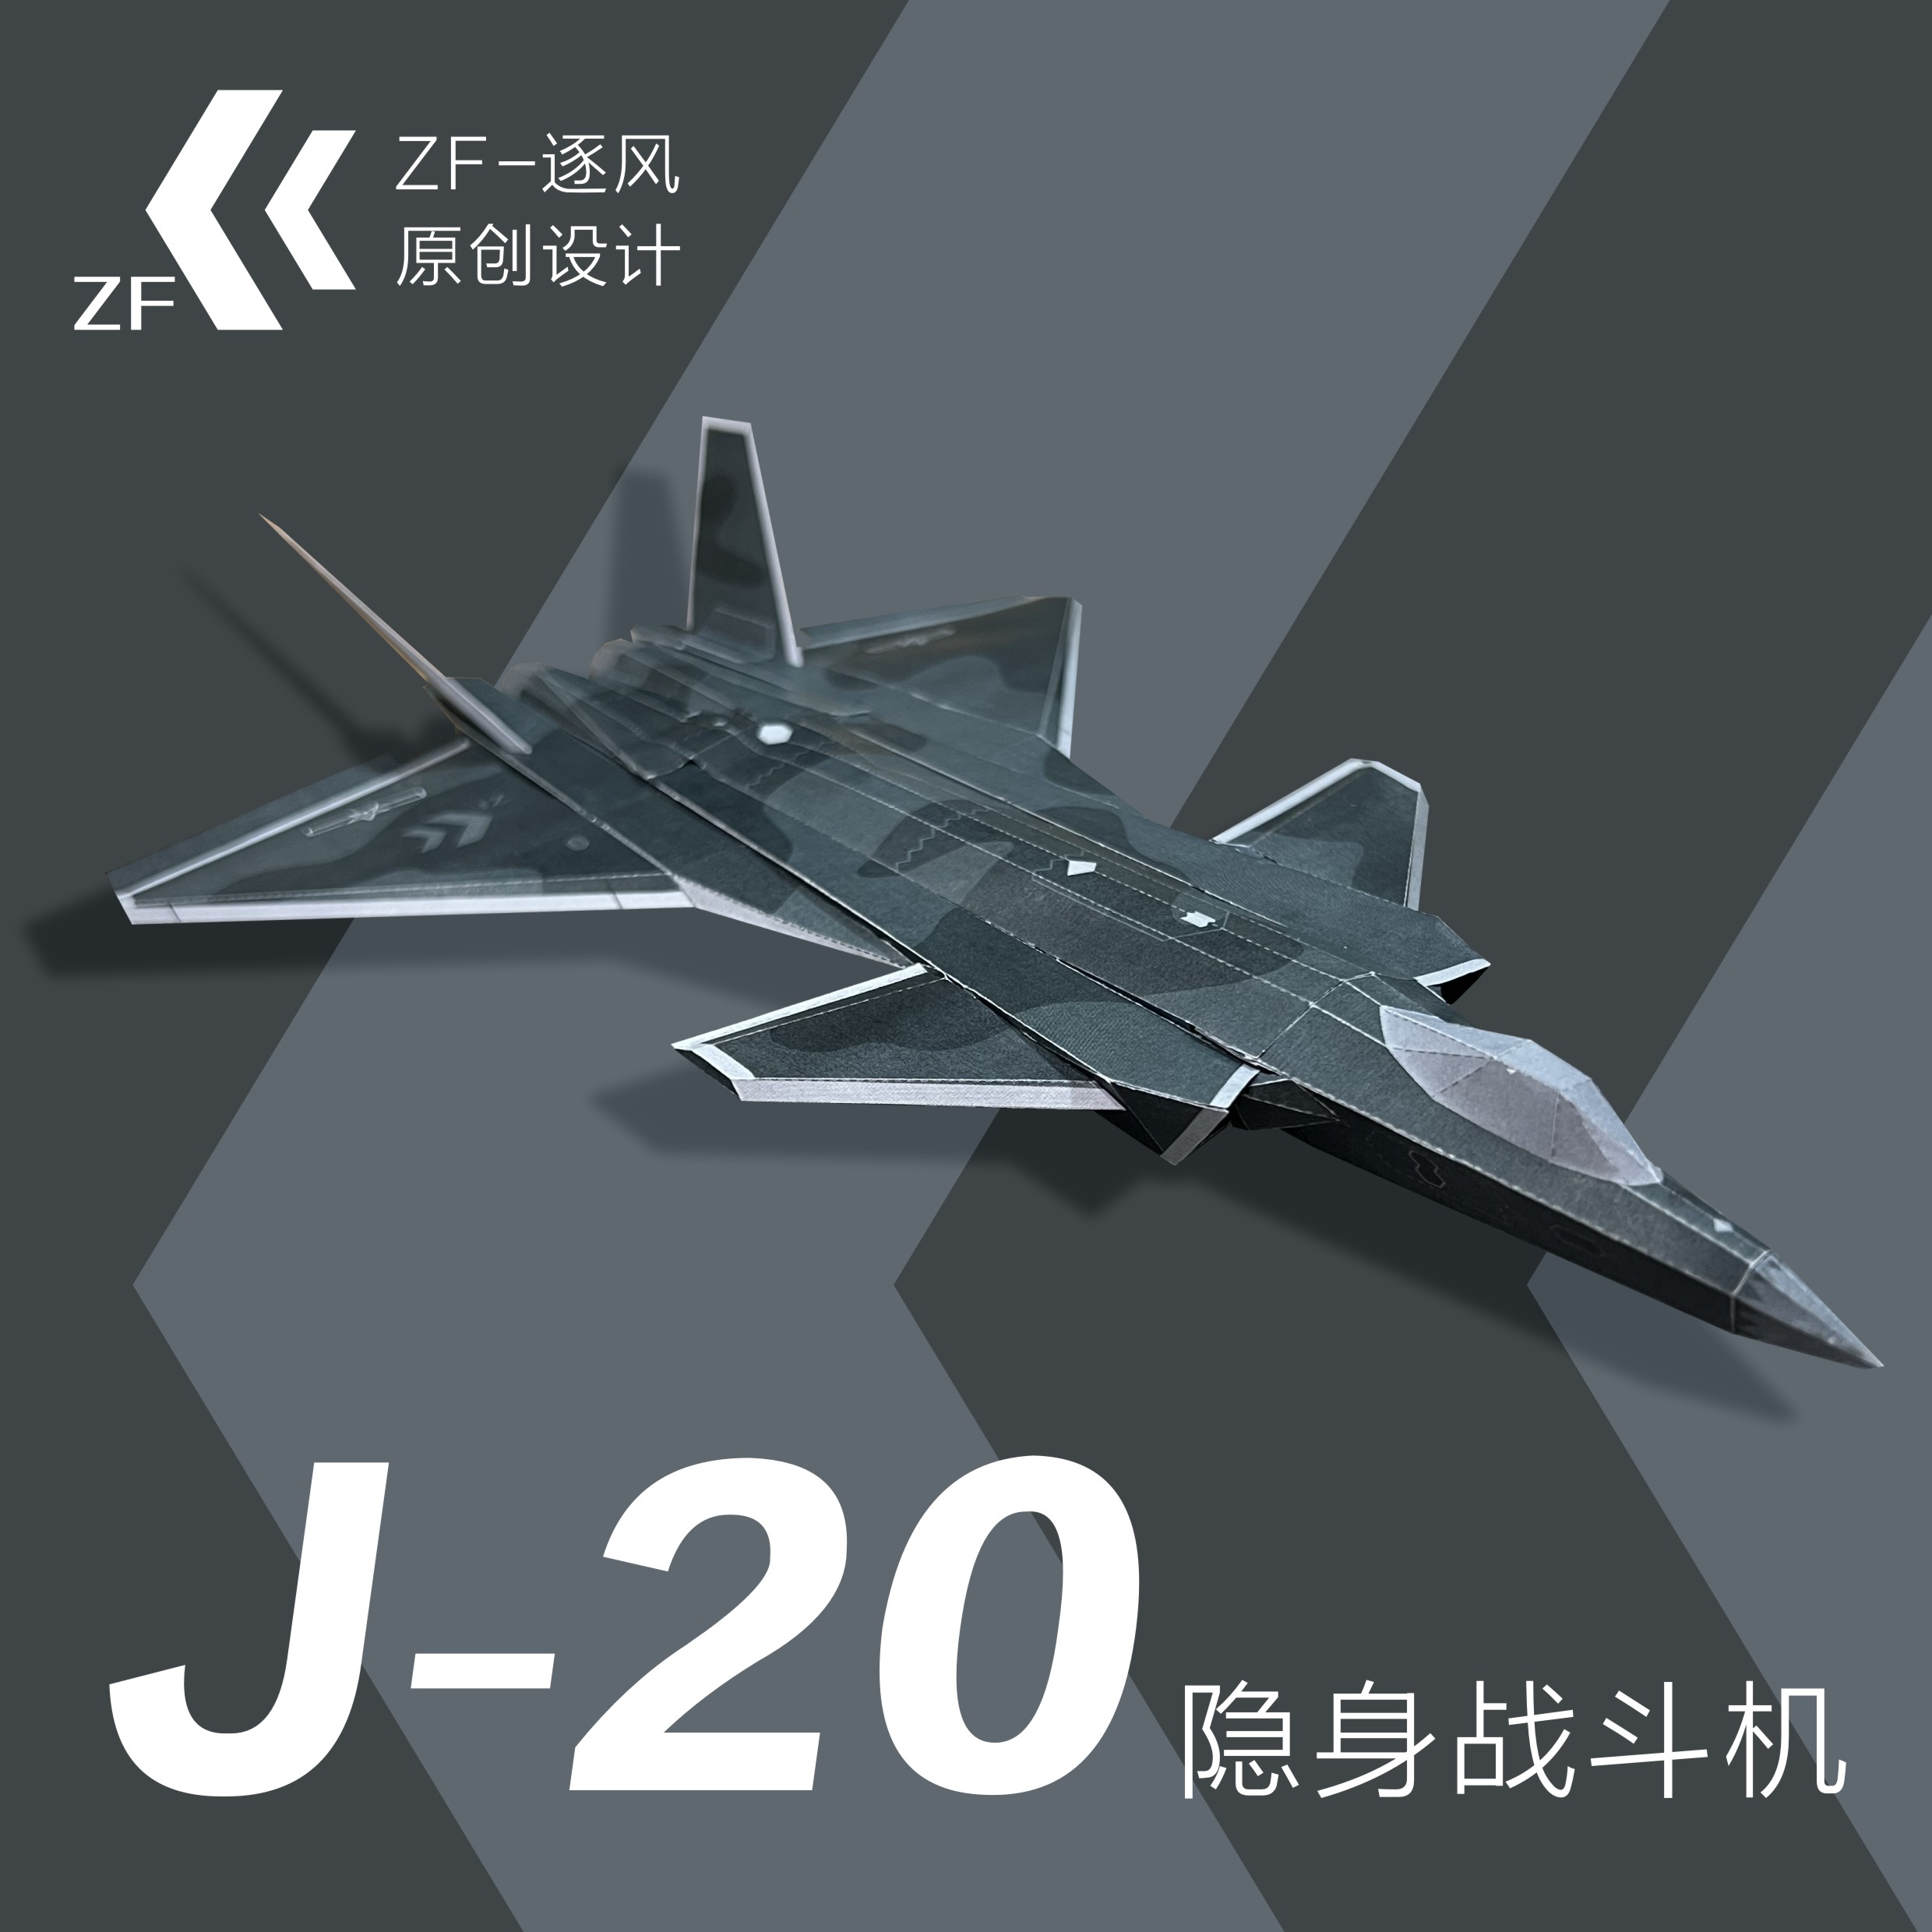 J20 歼20 隐身战斗机 逐风原创可飞纸模飞机图纸